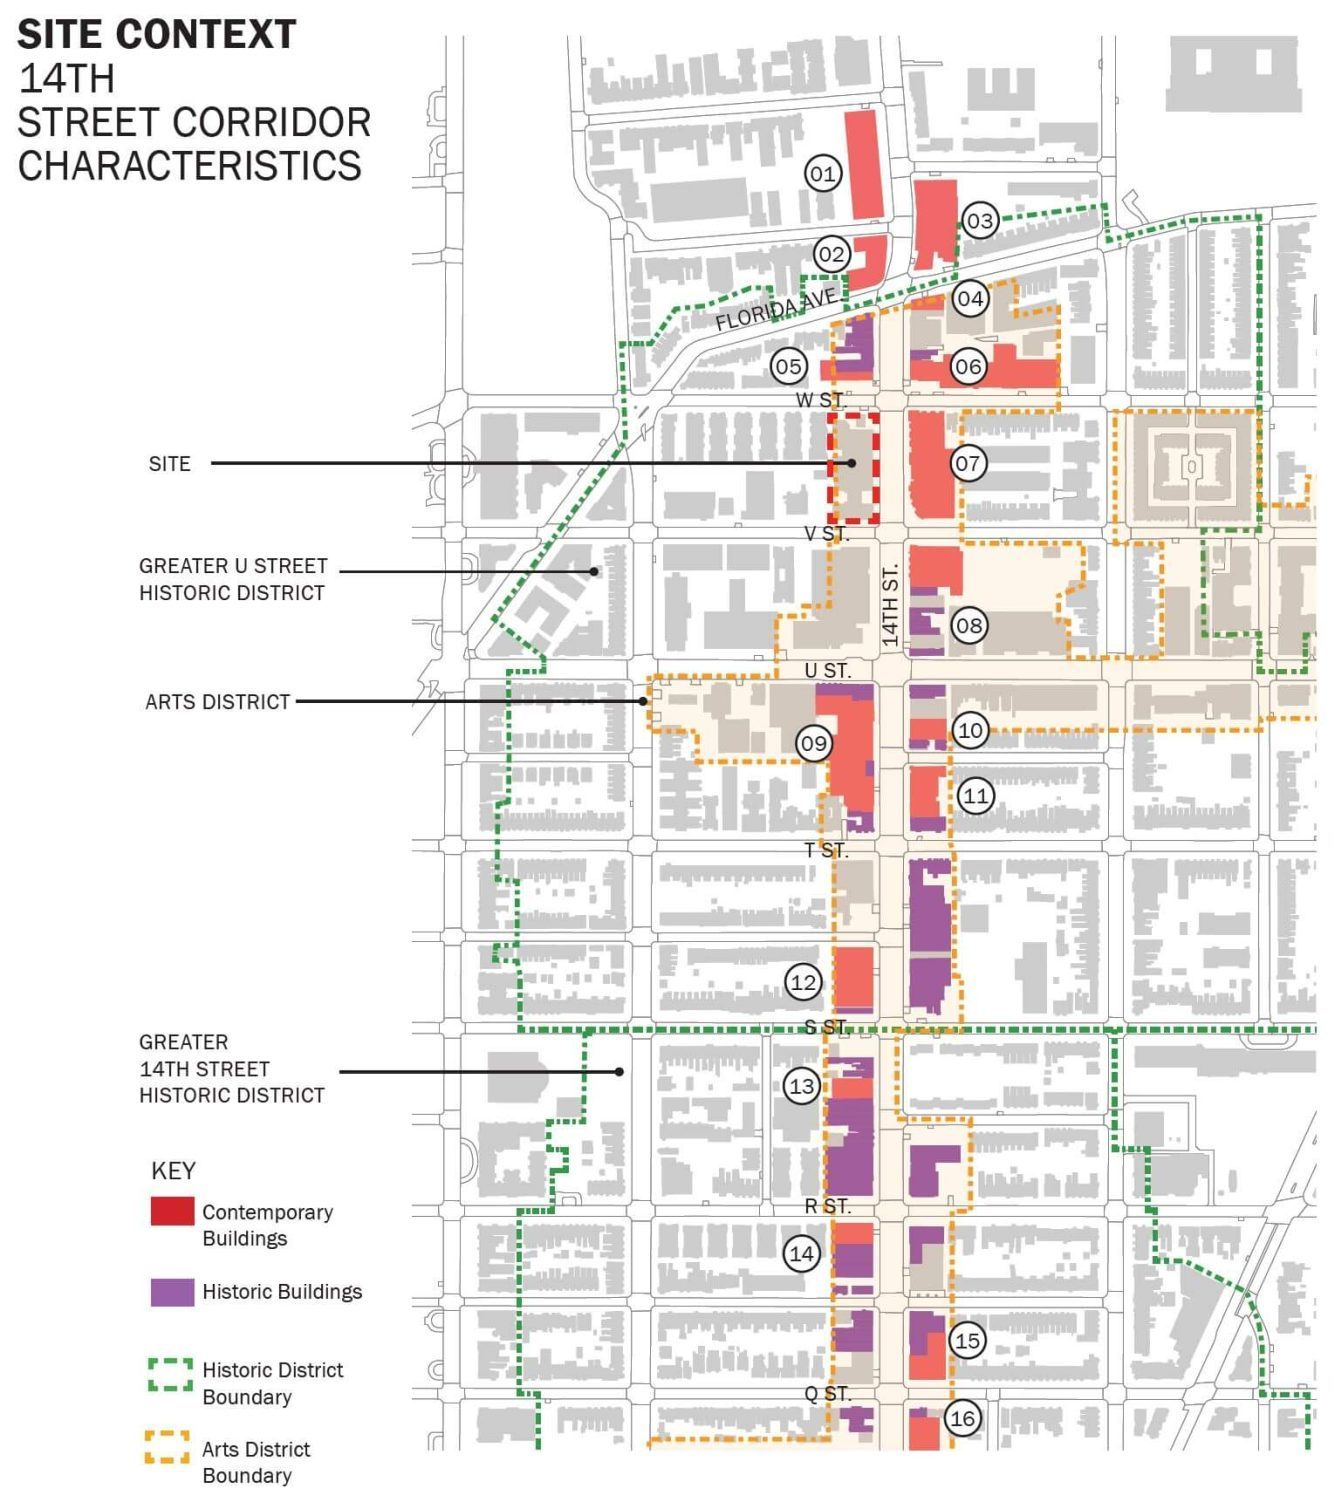 14th Street Corridor Characteristics. SIte, Greater U Street Historic District, Arts District, Greater 14th Street Historic District.